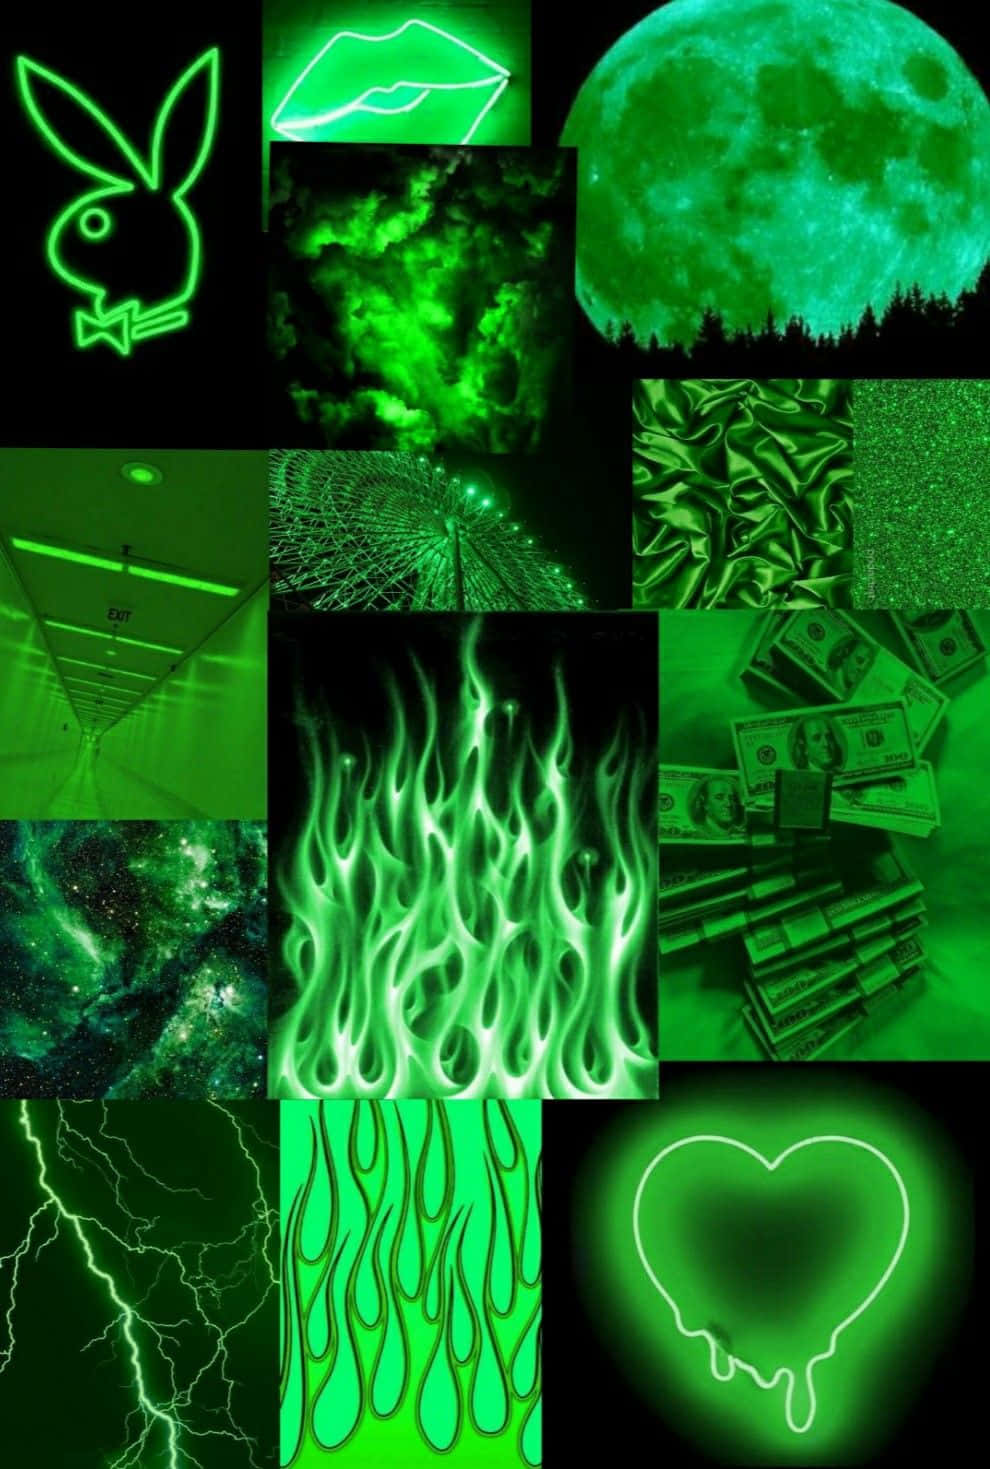 Download Neon Green Aesthetic 990 X 1469 Background | Wallpapers.com